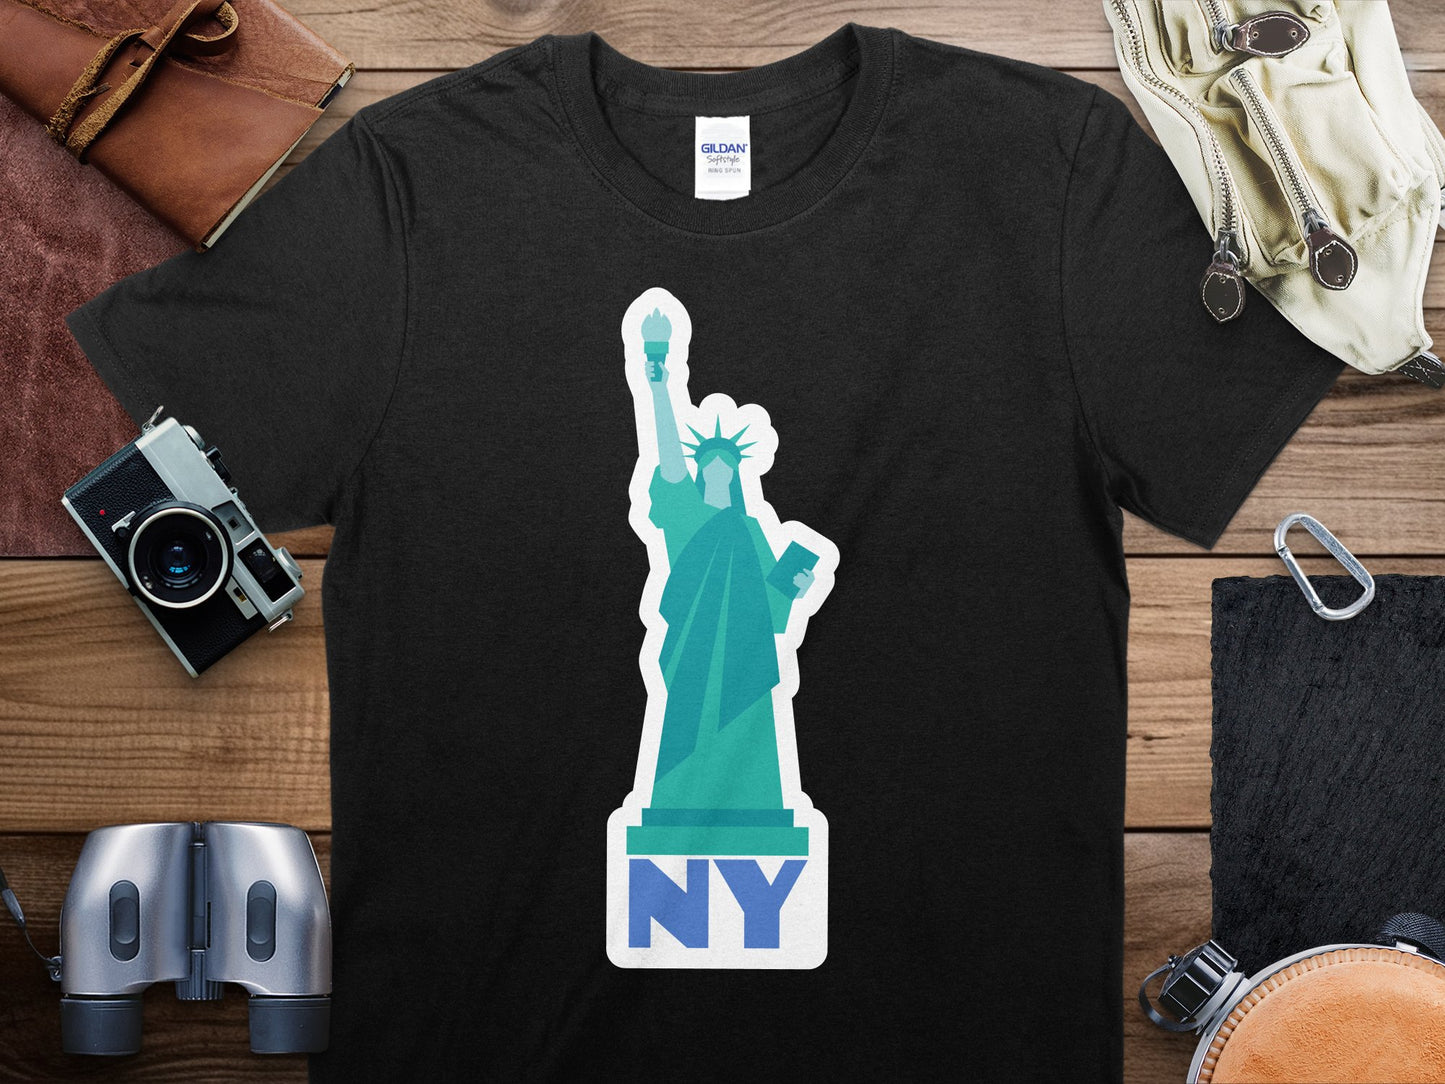 New York City Travel T-Shirt, New York City Shirt